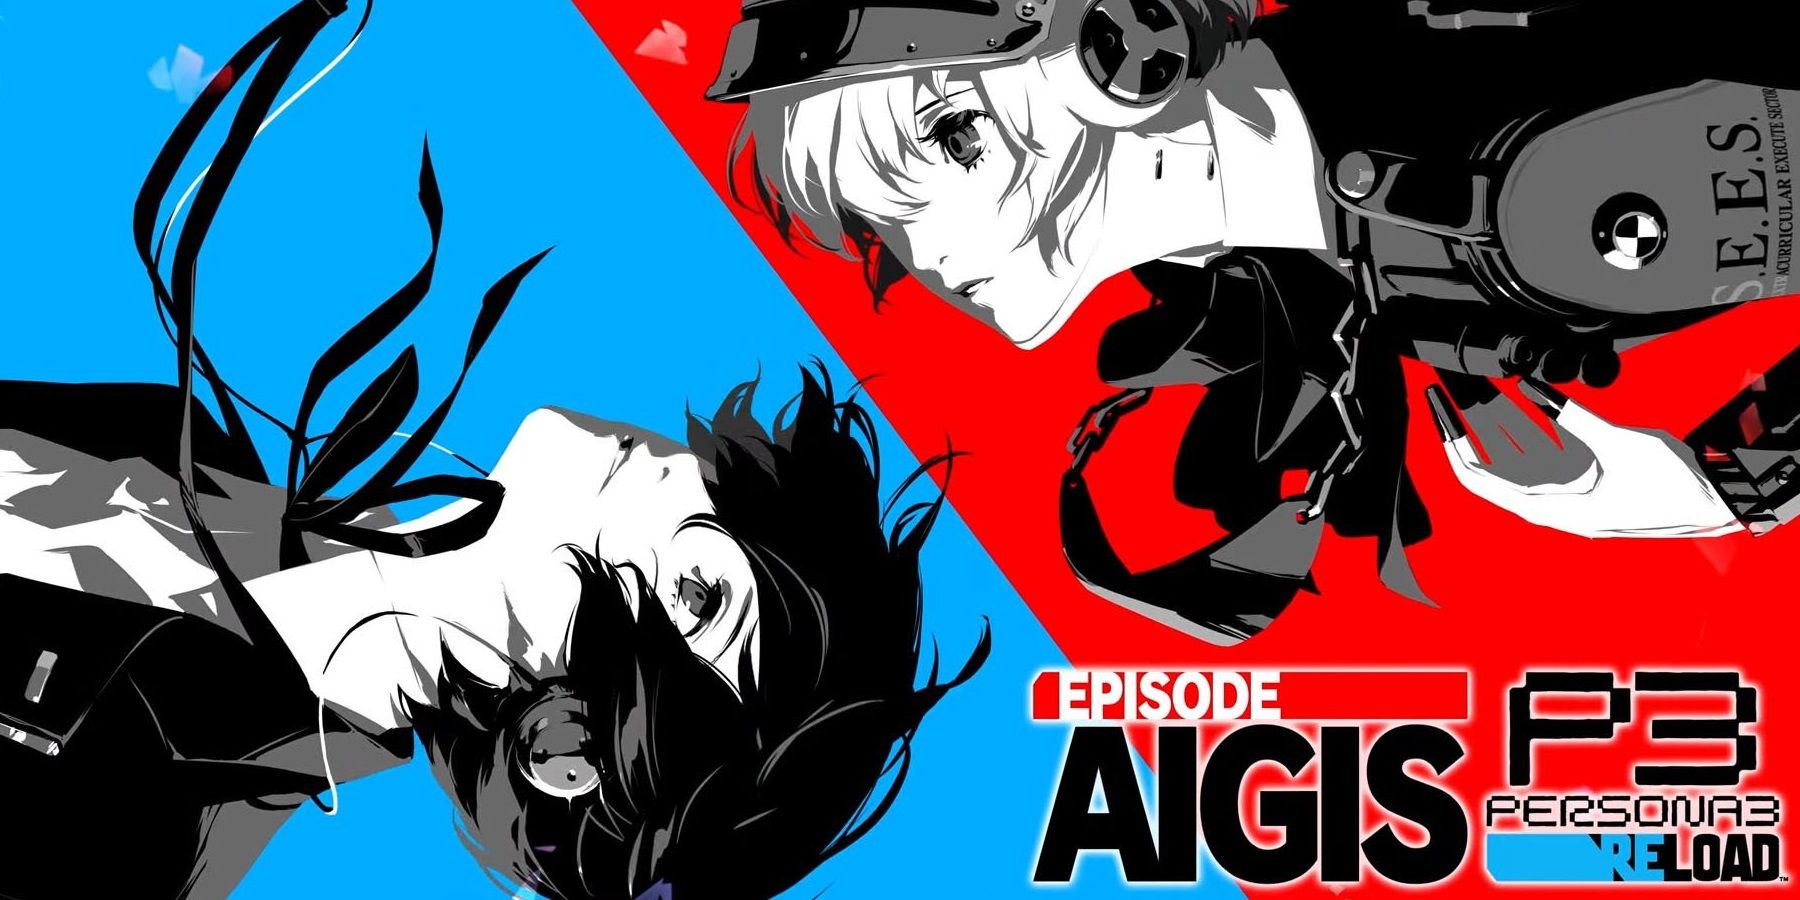 Persona 3 Reload Episode Aigis DLC Requires Expansion Pass